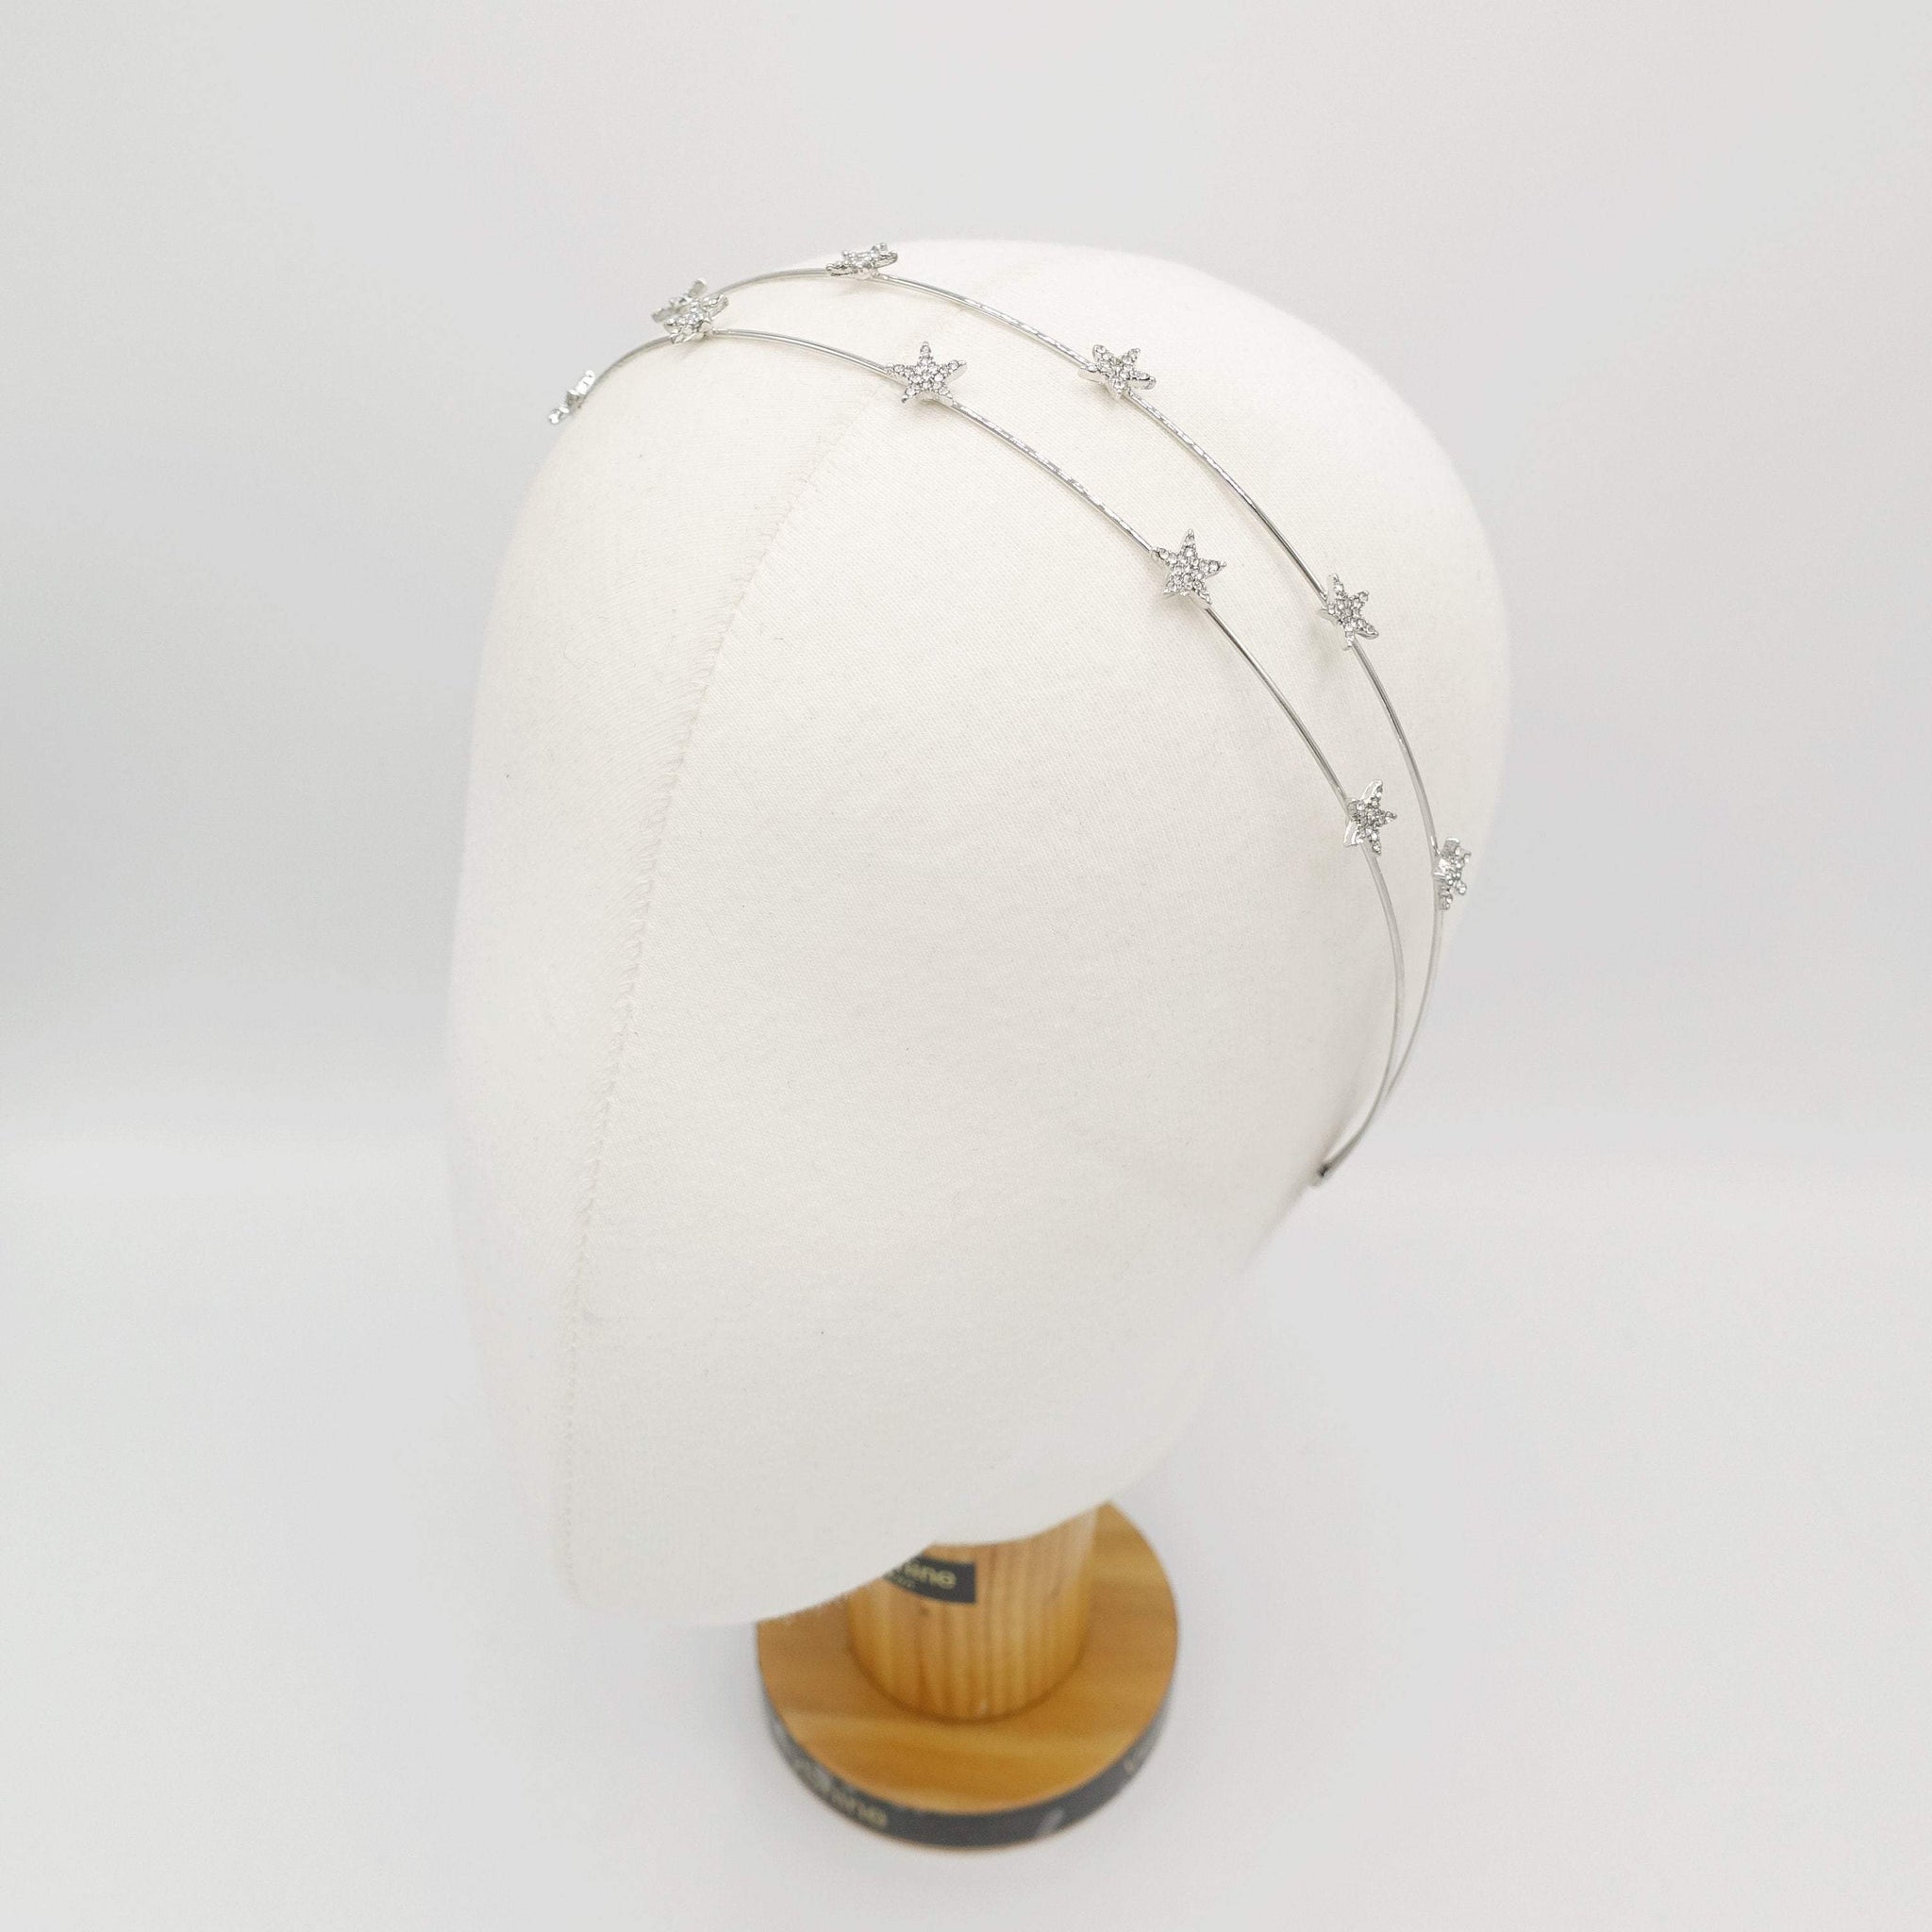 VeryShine Headband double strand star rhinestone headband thin metal headband for women